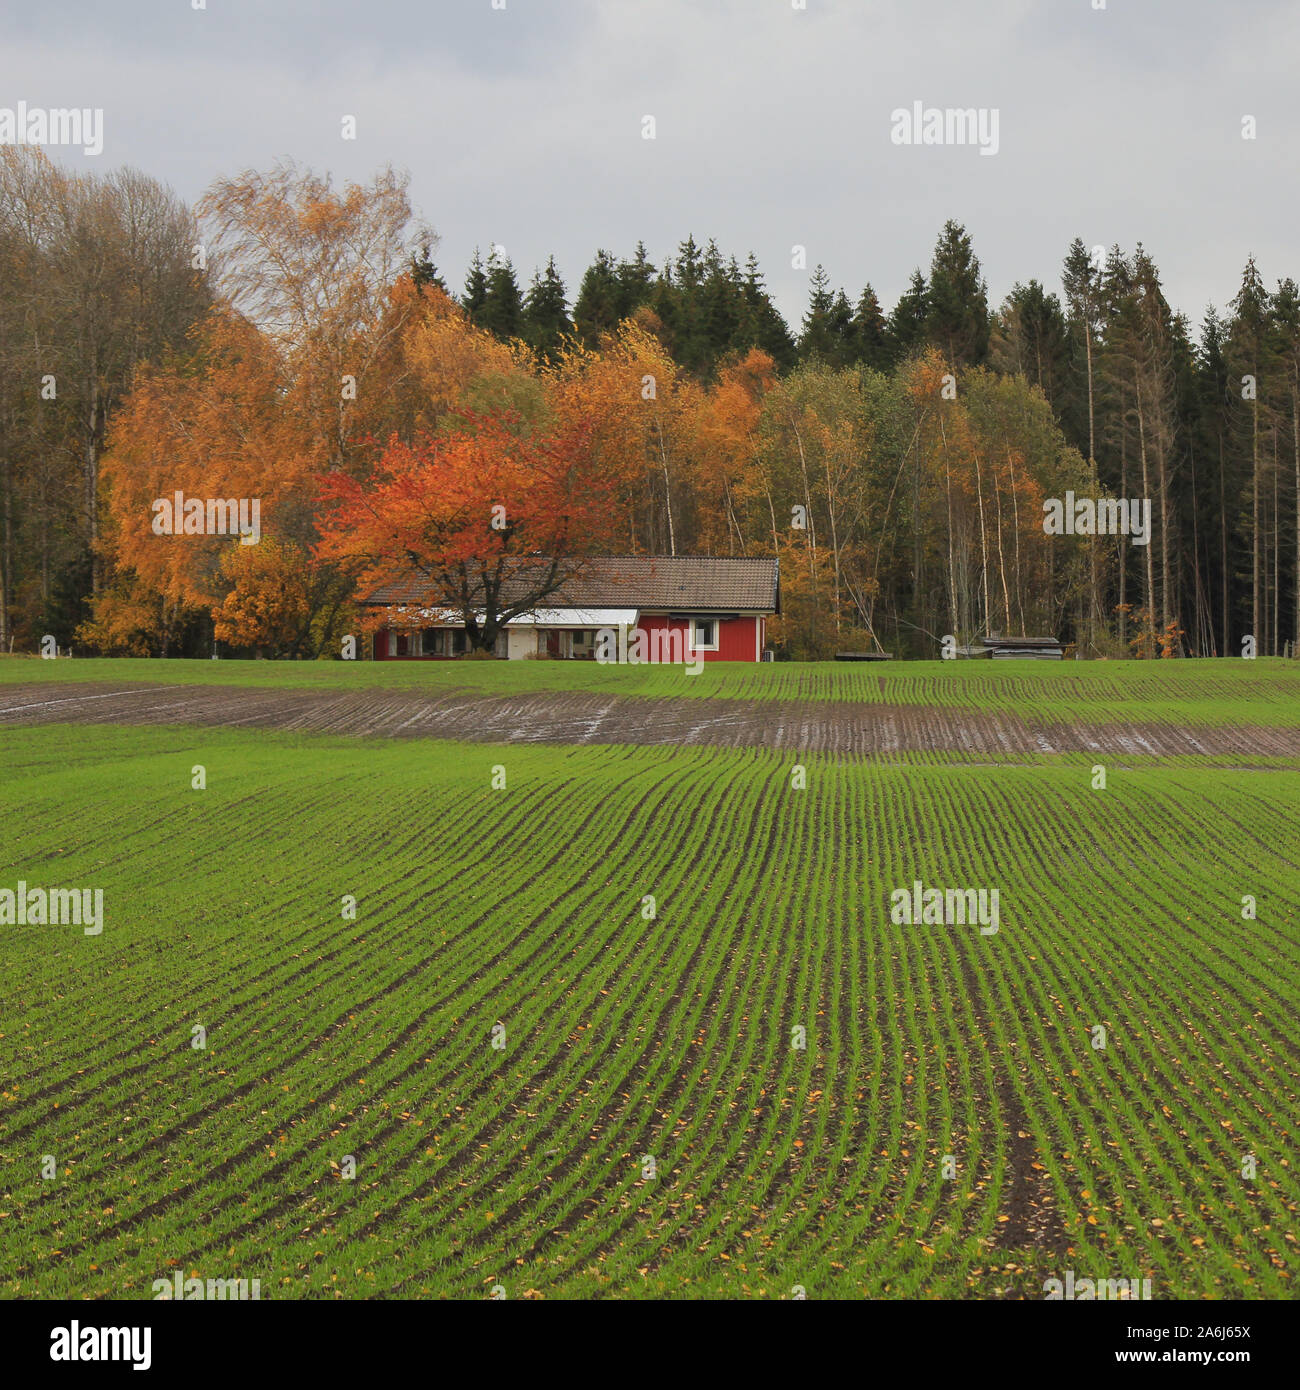 Rural October scene in Mellerud, Sweden. Stock Photo